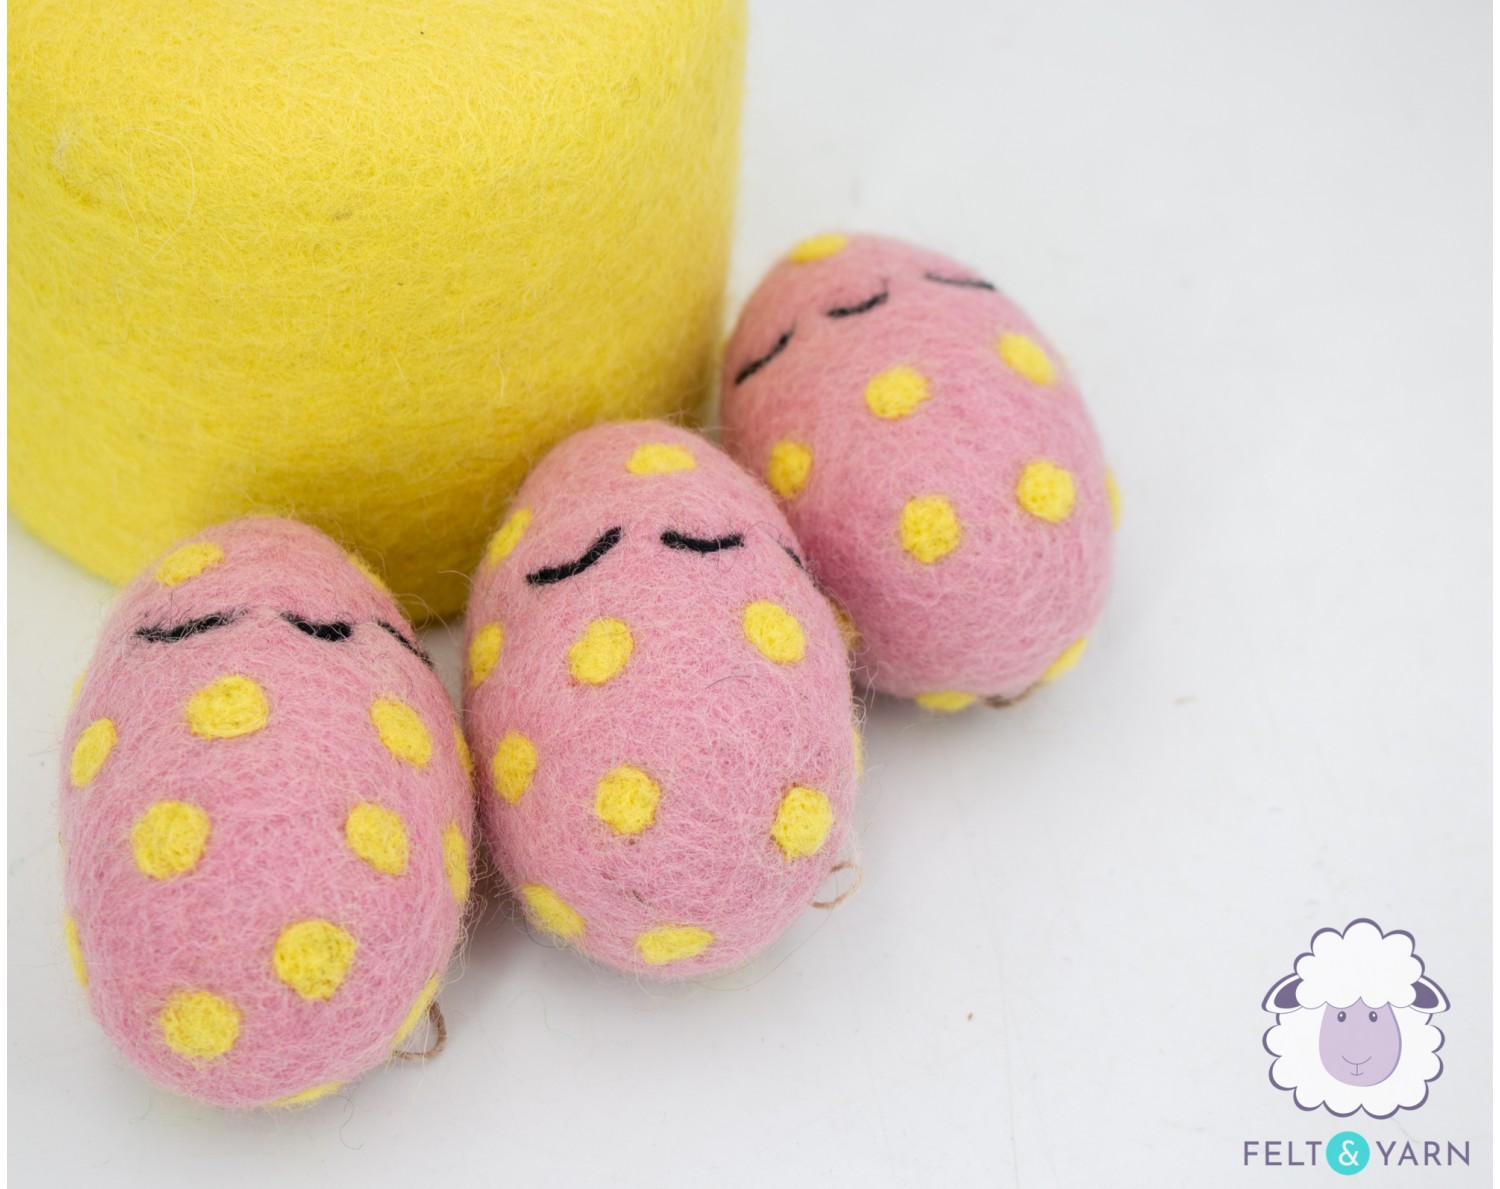 Cheeky Felt Easter Egg Pattern for Home Décor - Felt & Yarn